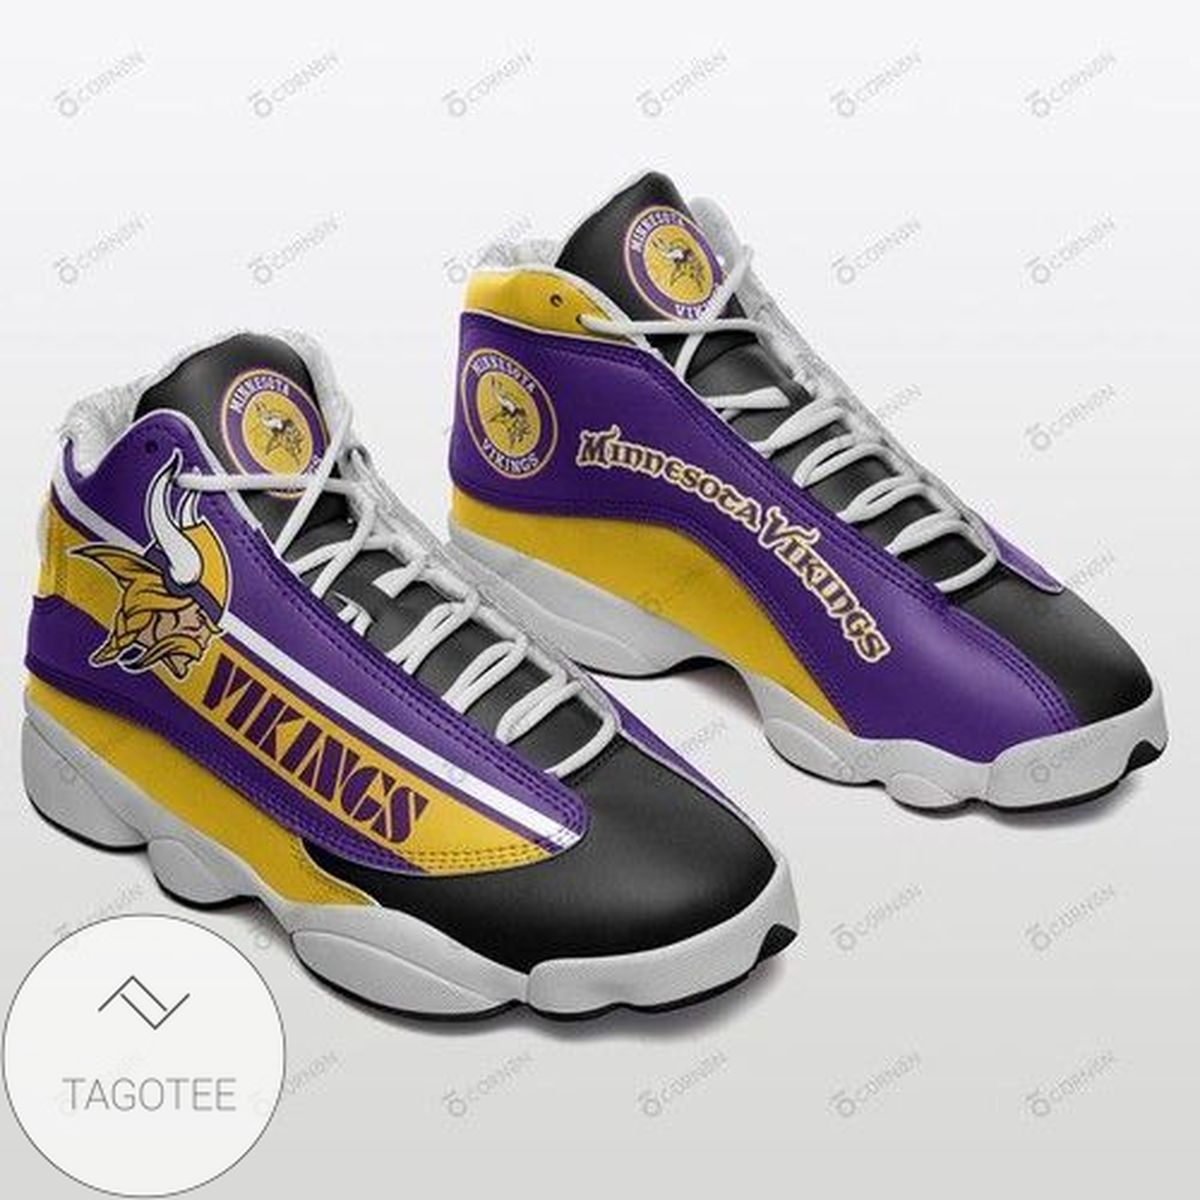 Minnesota Vikings Personalized Air Jordan 13 Shoes Sport Sneakers For Fan